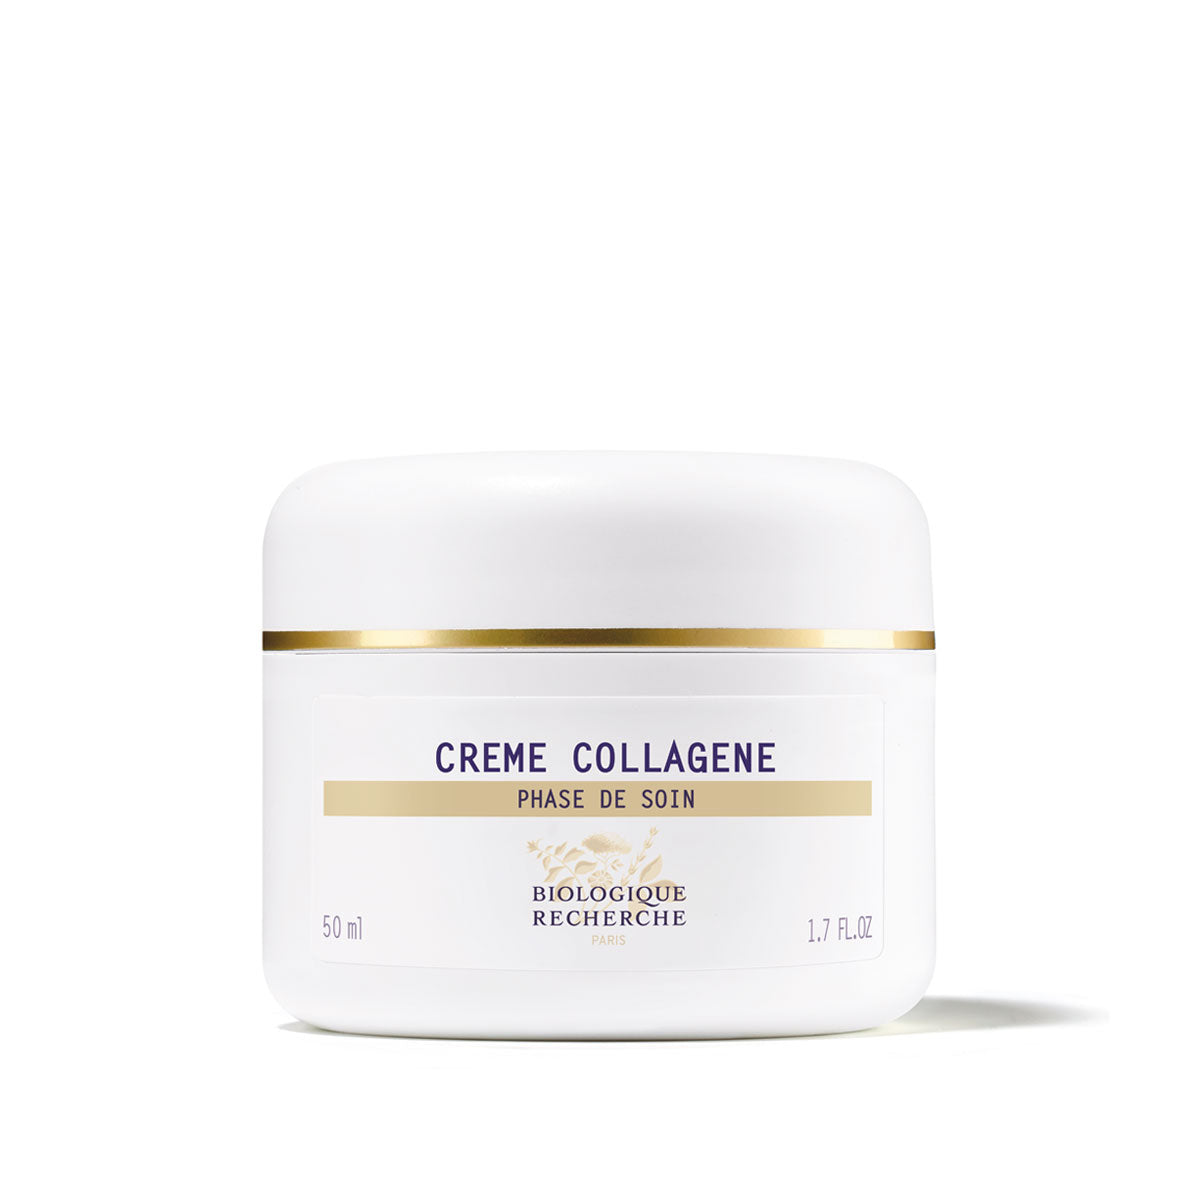 Creme Collagene -- Redensifying Face Cream ** 1.7oz